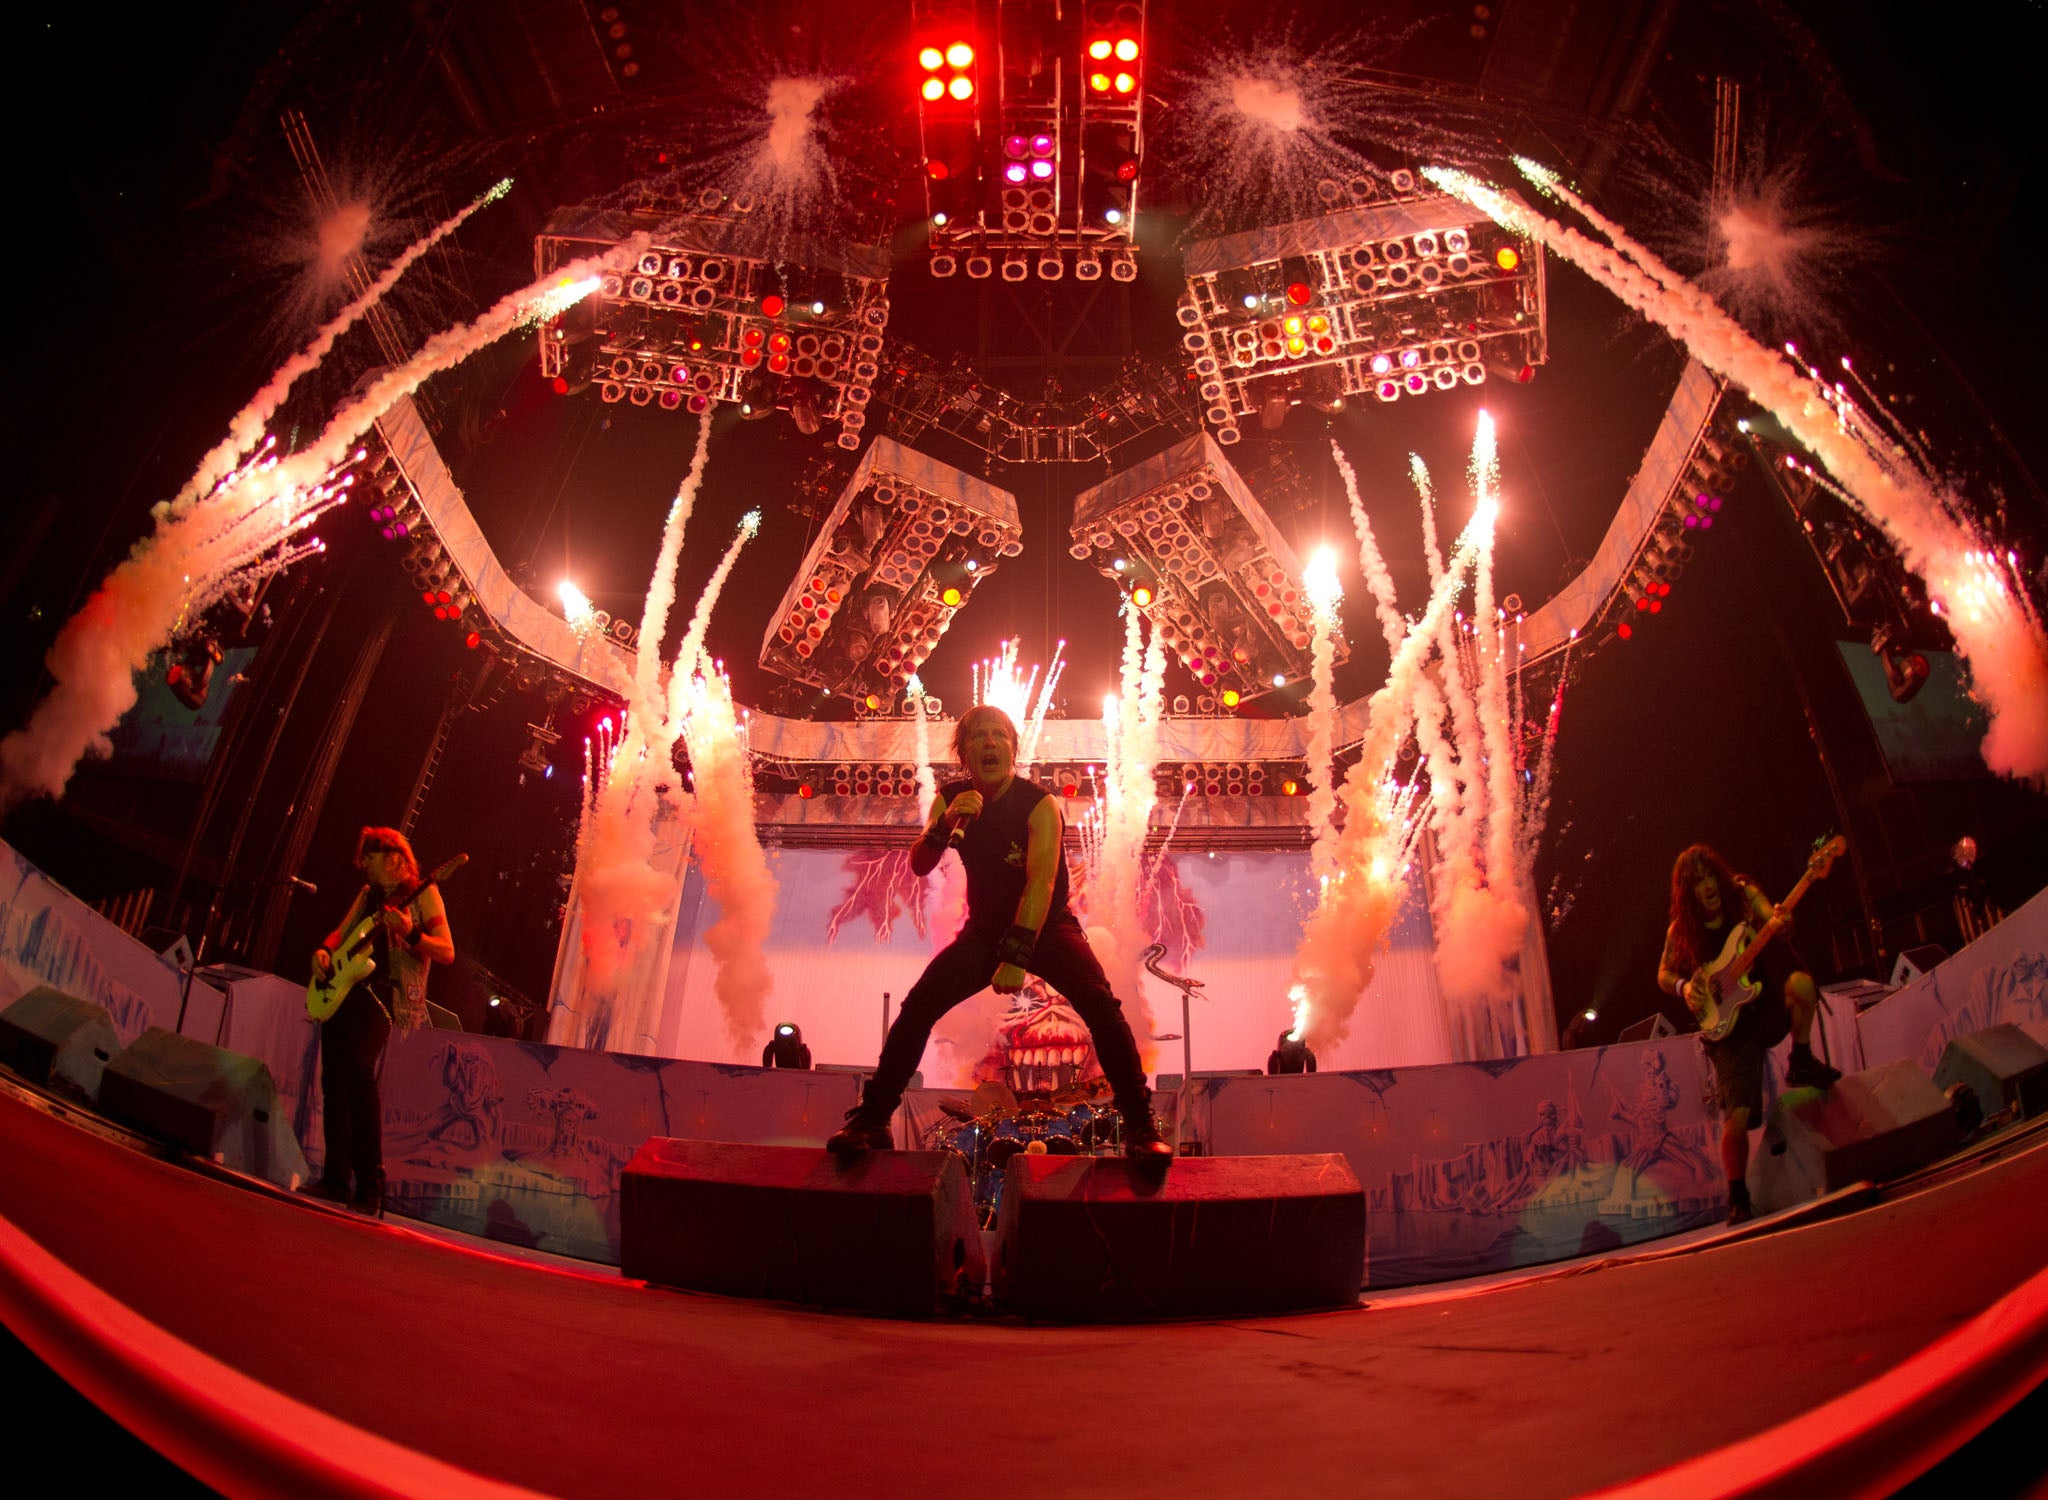 Iron Maiden will headline next summer's Sonisphere festival alongside Metallica